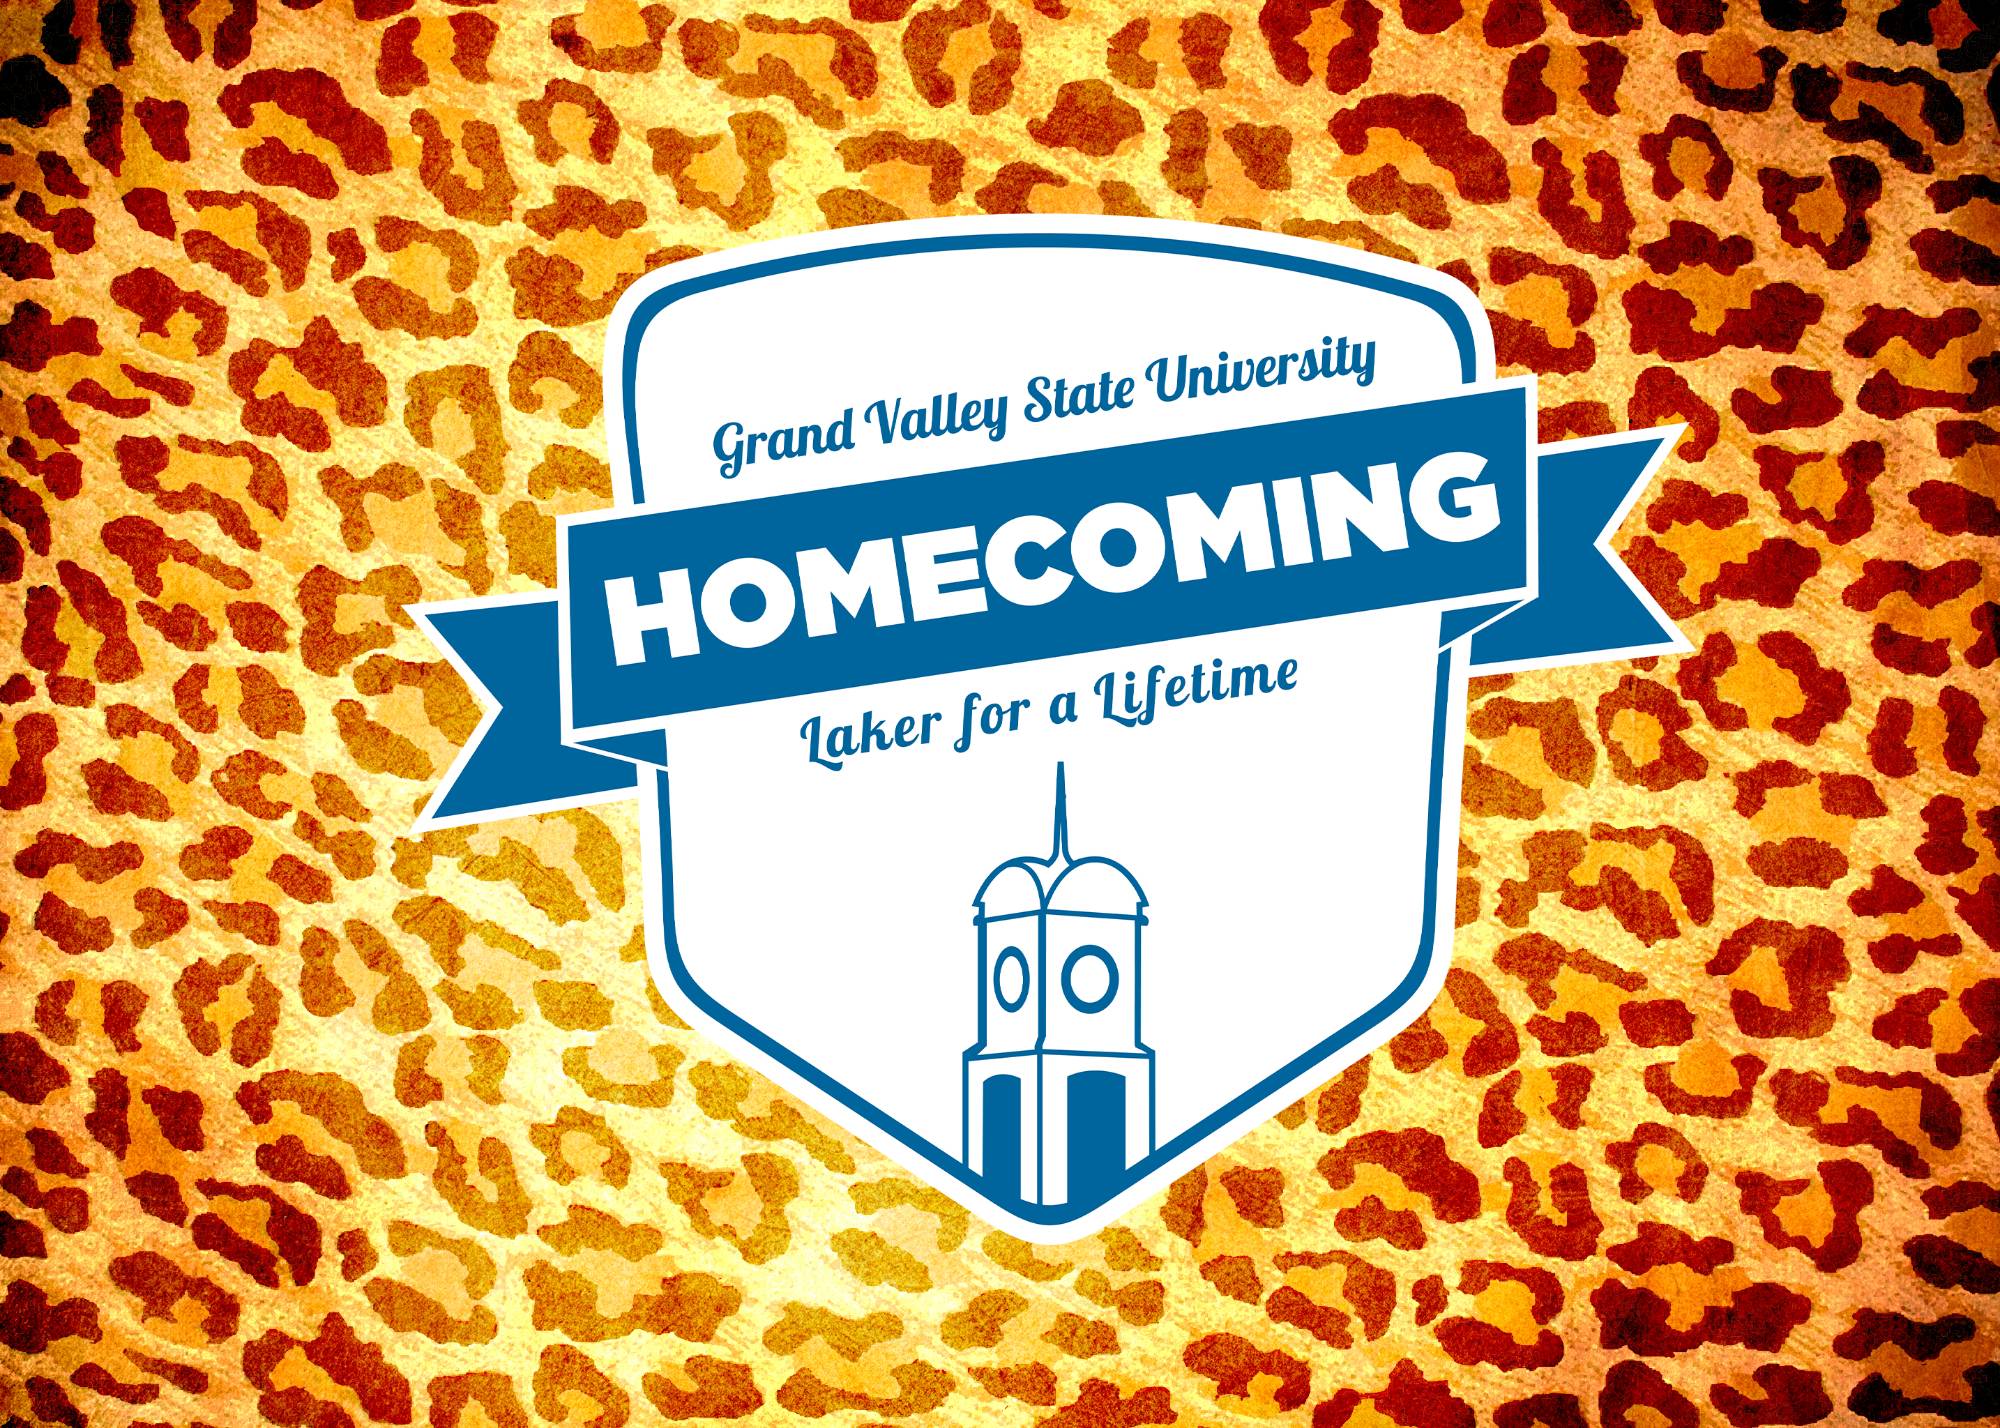 Cheetah print with GVSU Homecoming logo